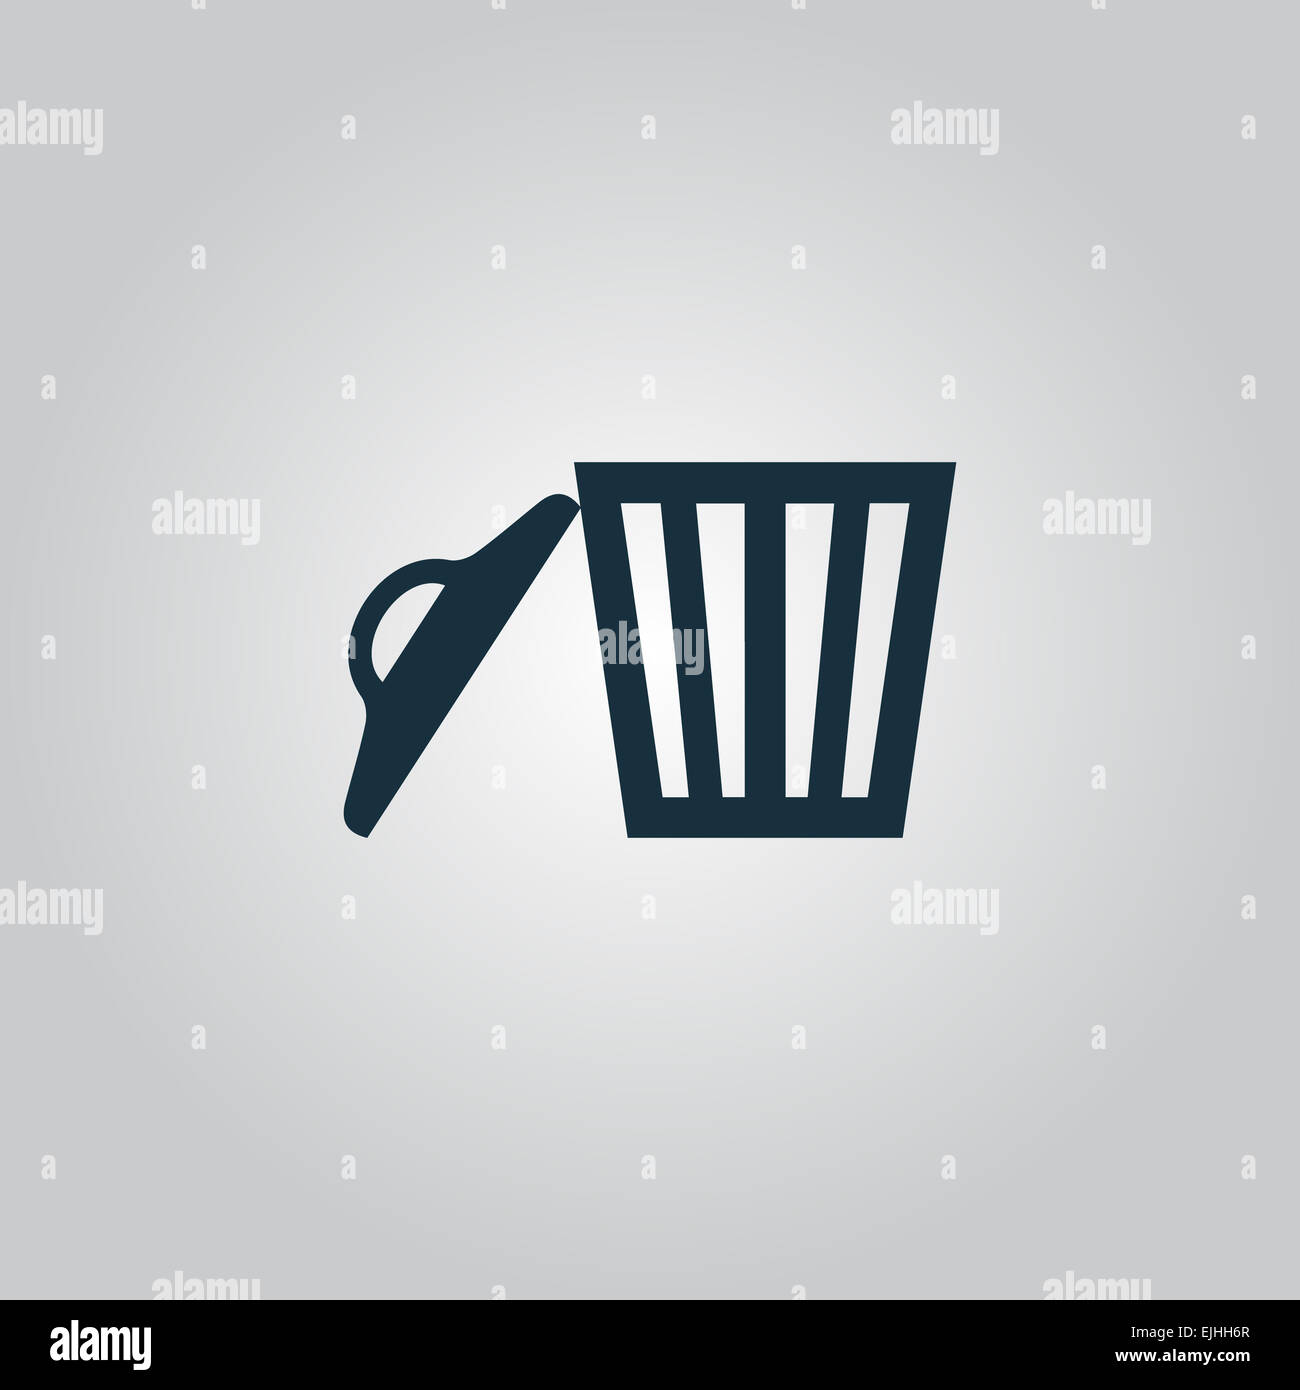 Trash can. Vector illustration Stock Photo